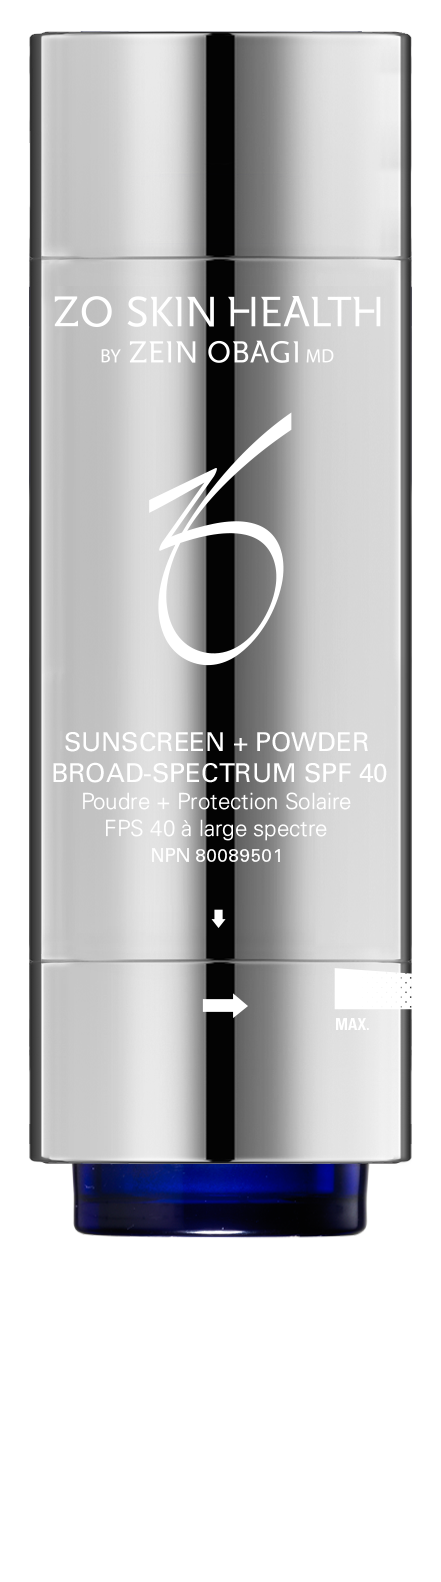 Poudre & Protection Solaire Large Spectre SPF 40 - teinte claire